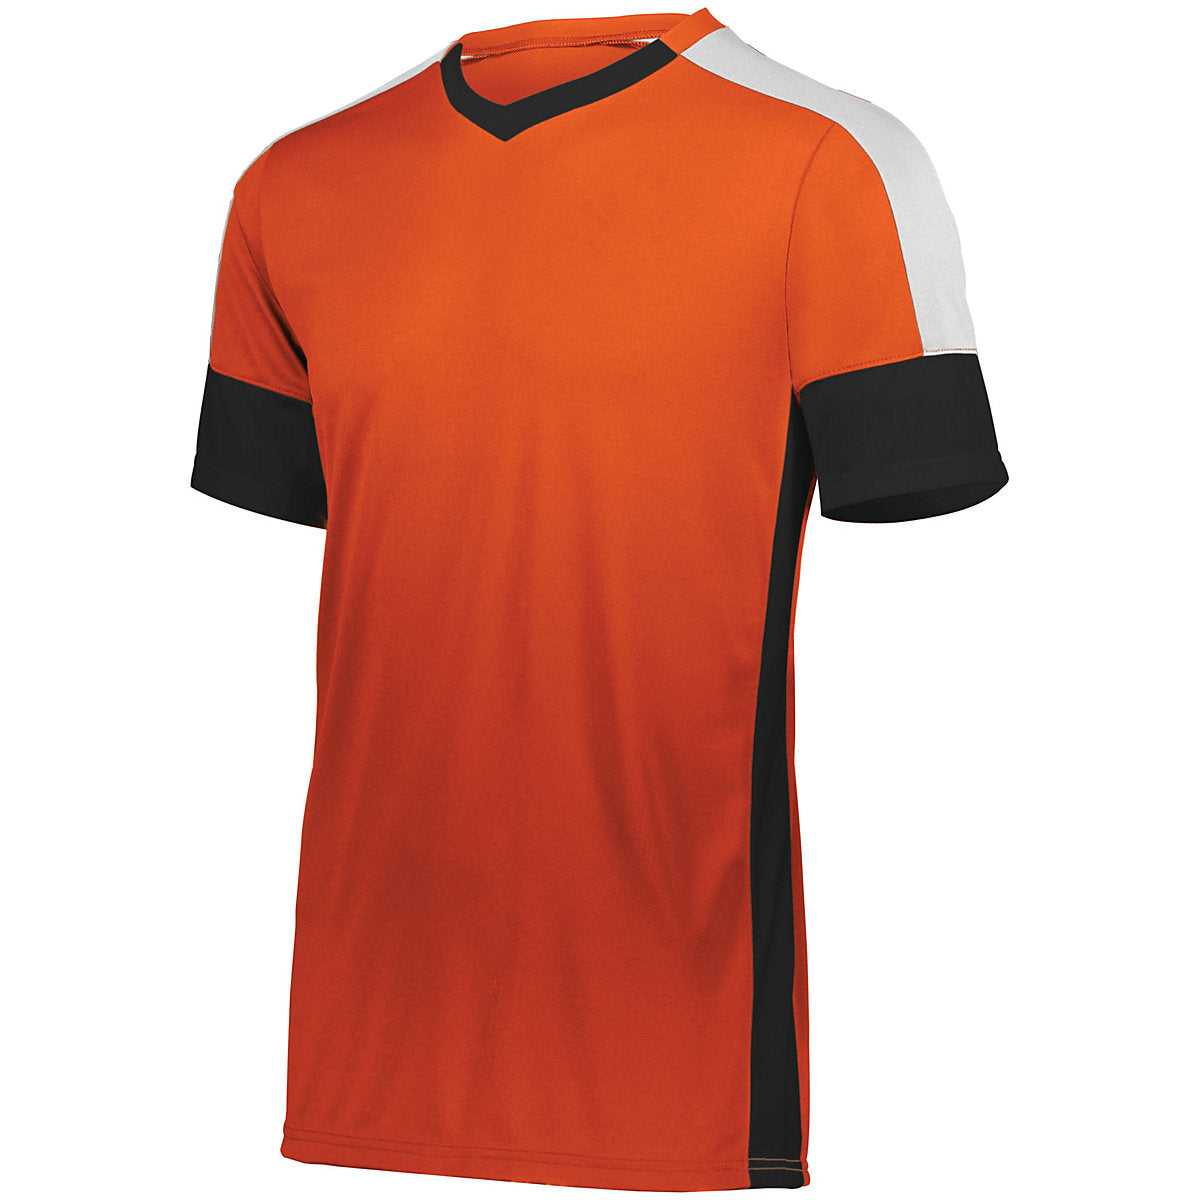 High Five 322930 Wembley Soccer Jersey - Orange Black White - HIT a Double